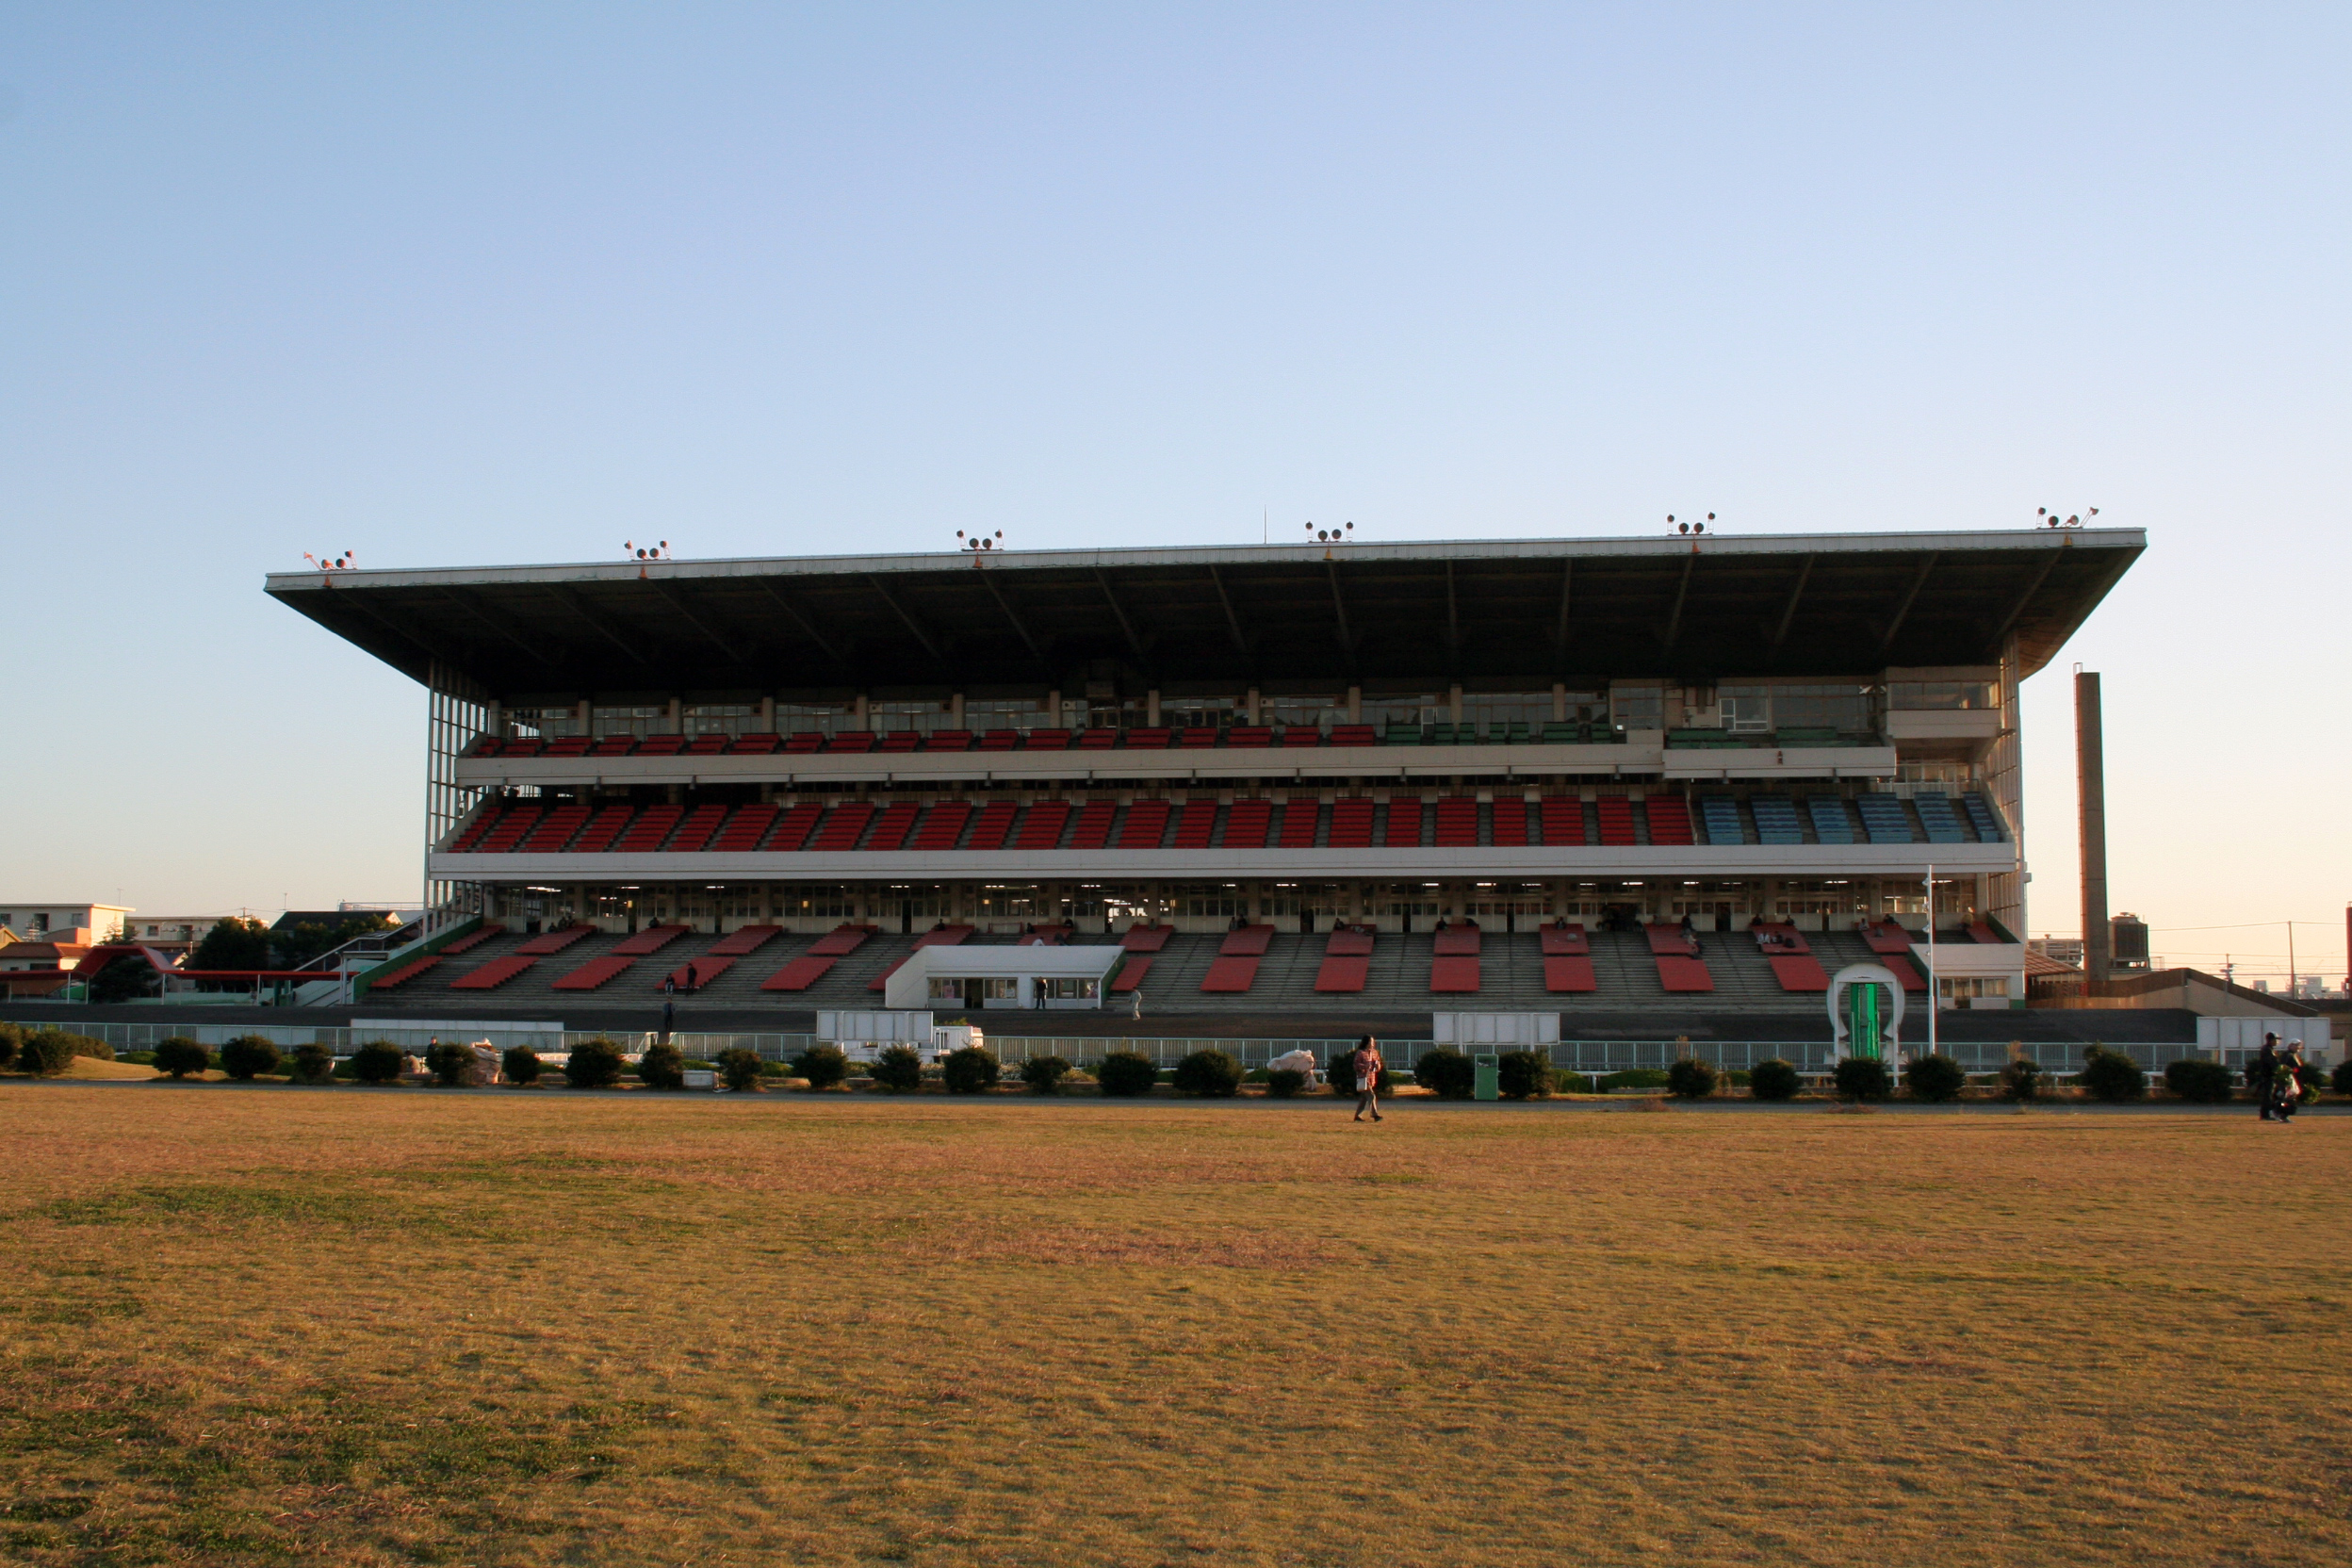 File:Stands of Himeji park horse race track.jpg